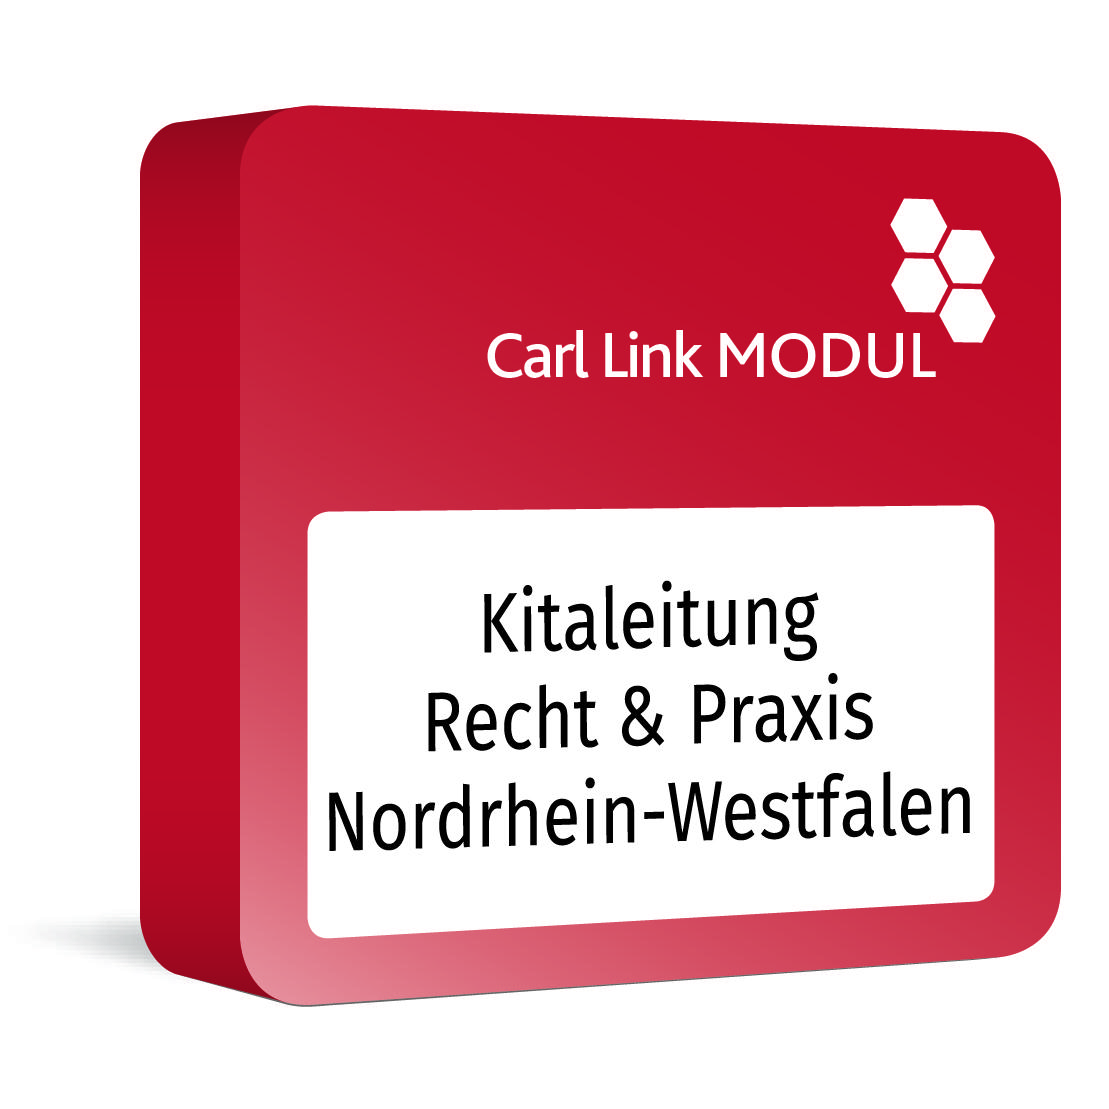 Carl Link Modul Kitaleitung Nordrhein-Westfalen